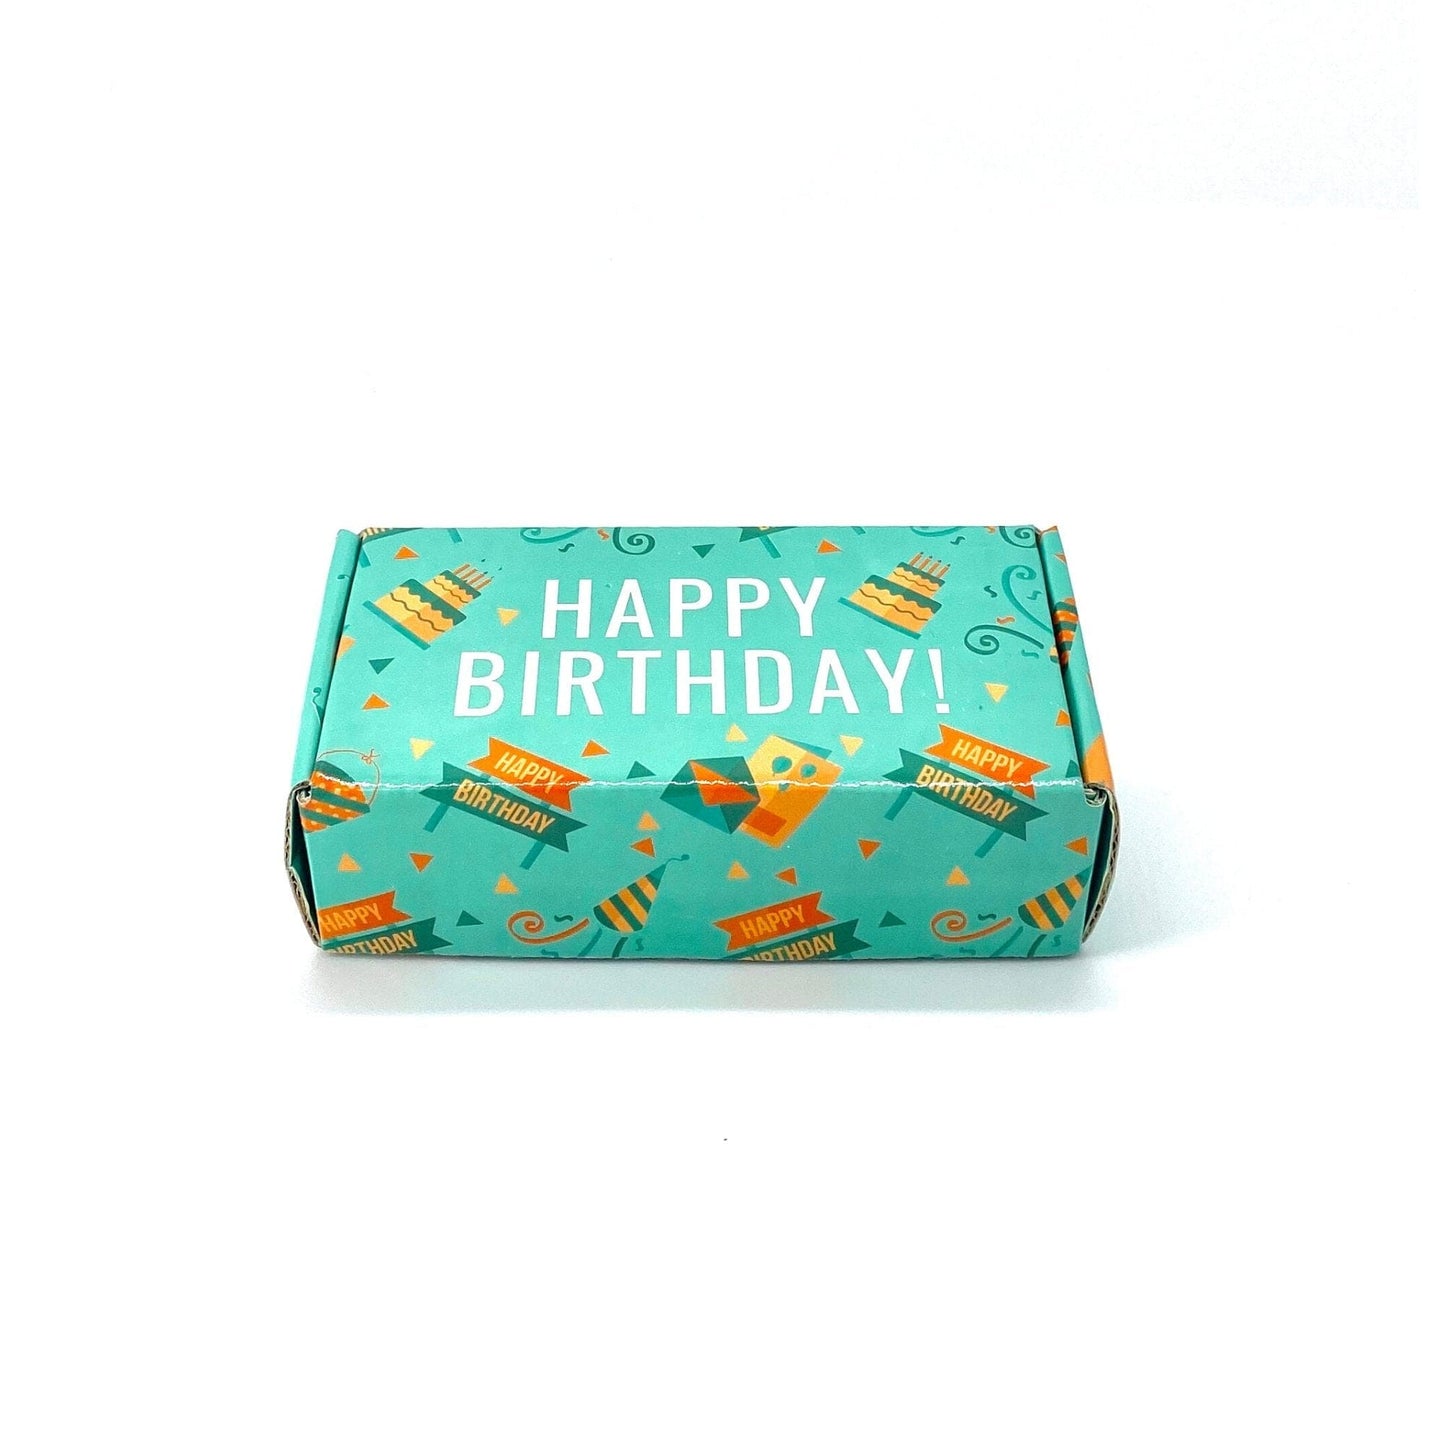 Happy Birthday - Eat A Dick Chocolate by DickAtYourDoor